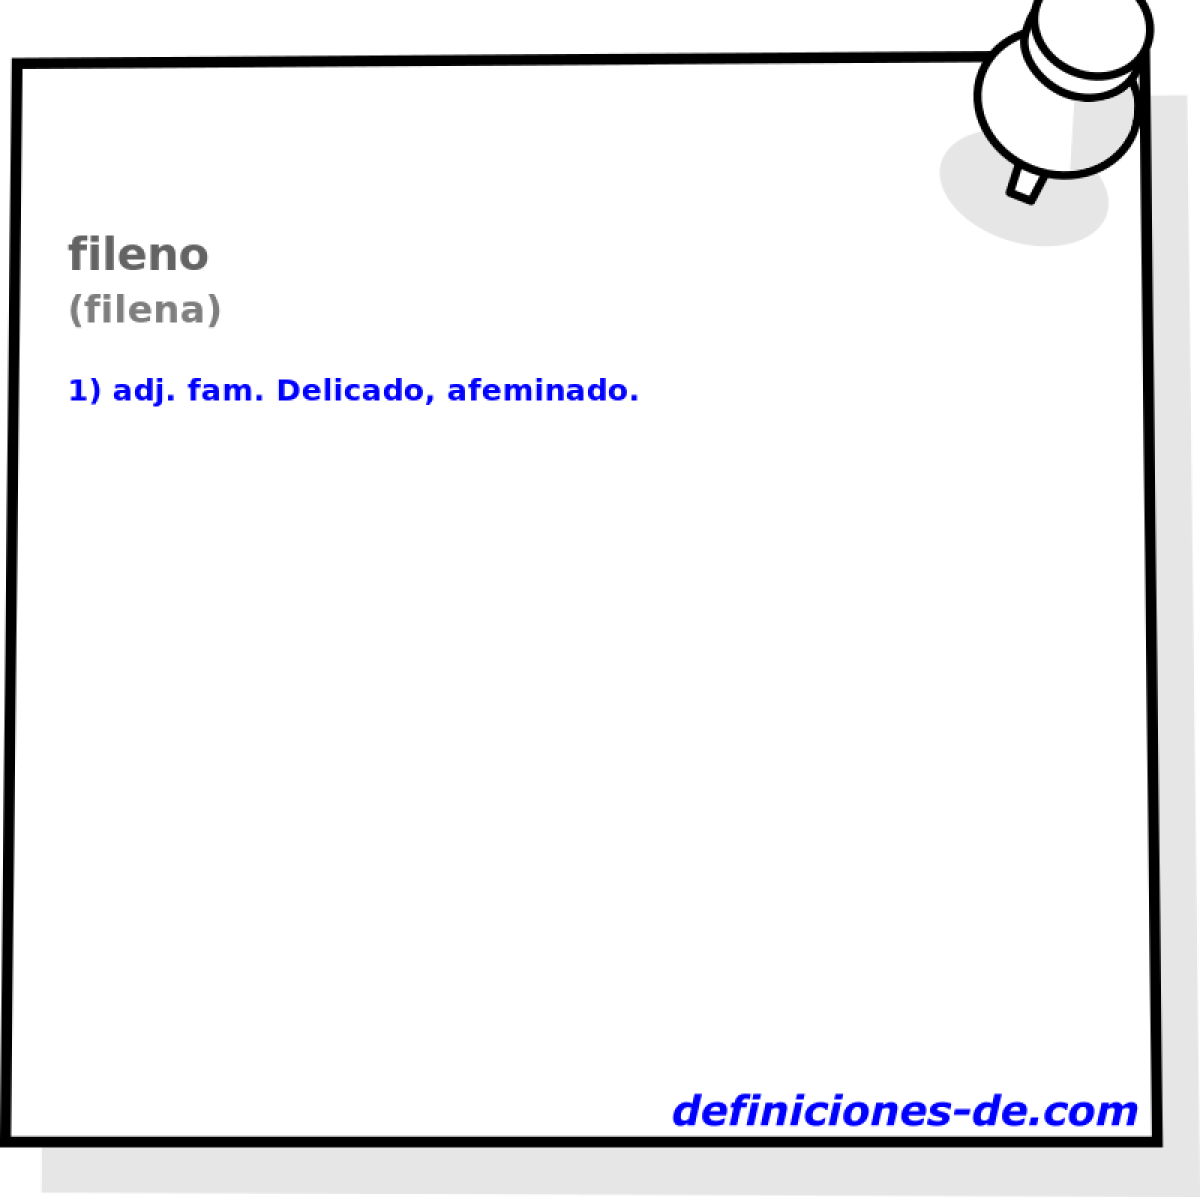 fileno (filena)